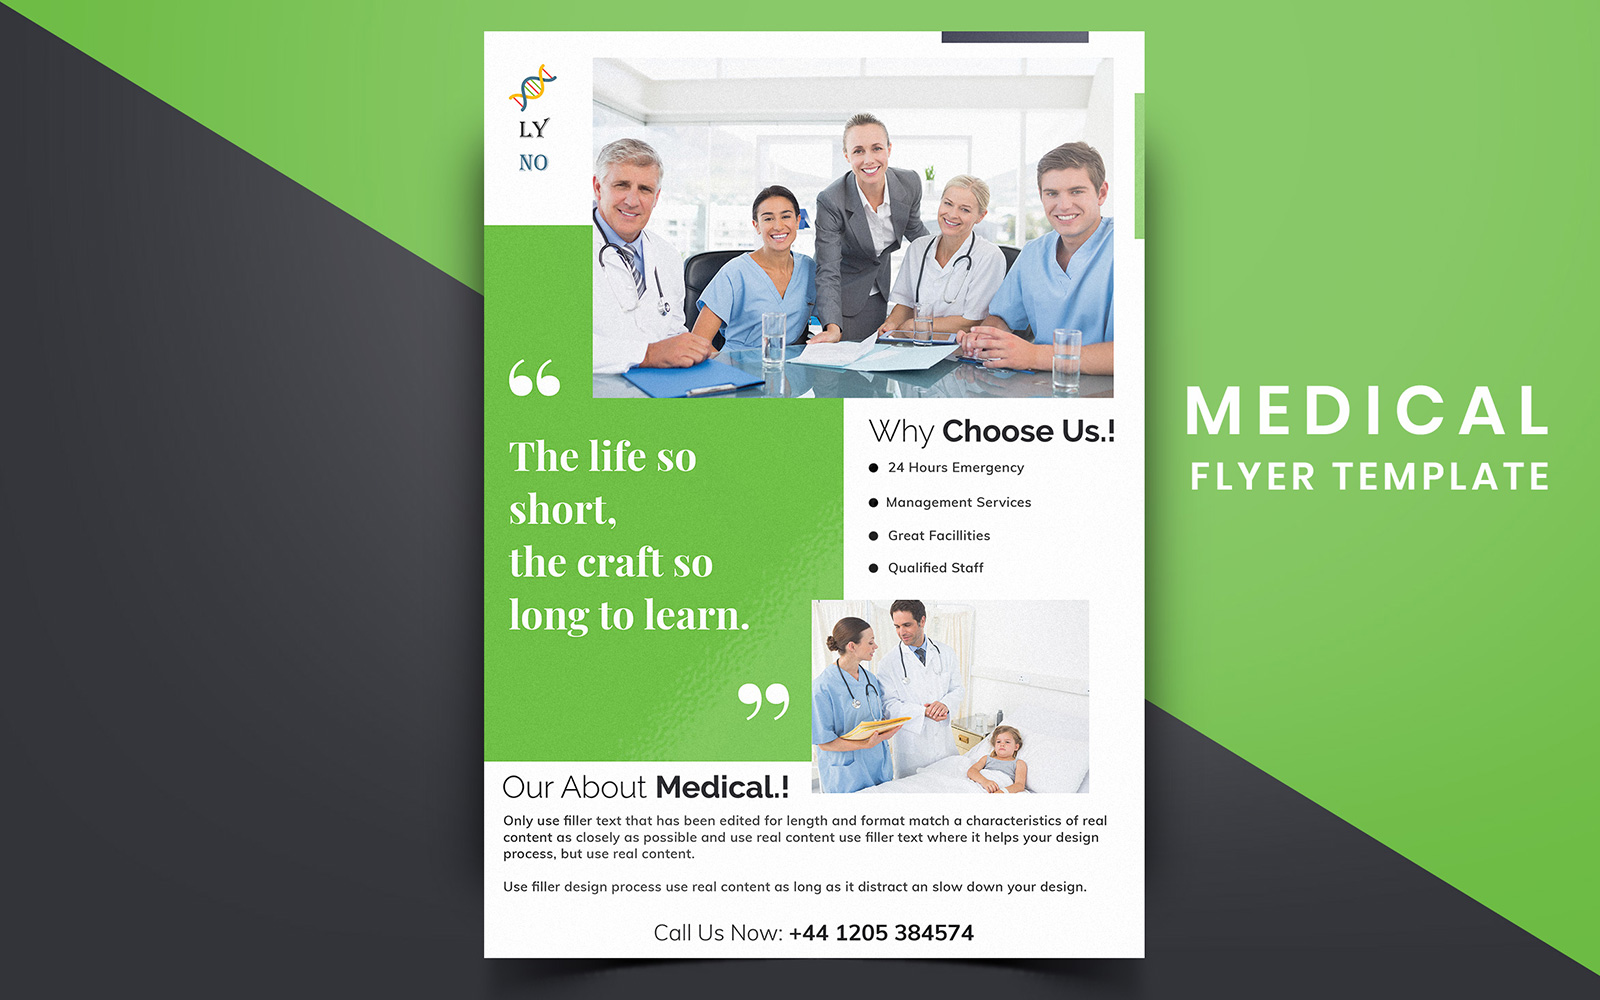 Hippie - Medical Flyer Design - Corporate Identity Template